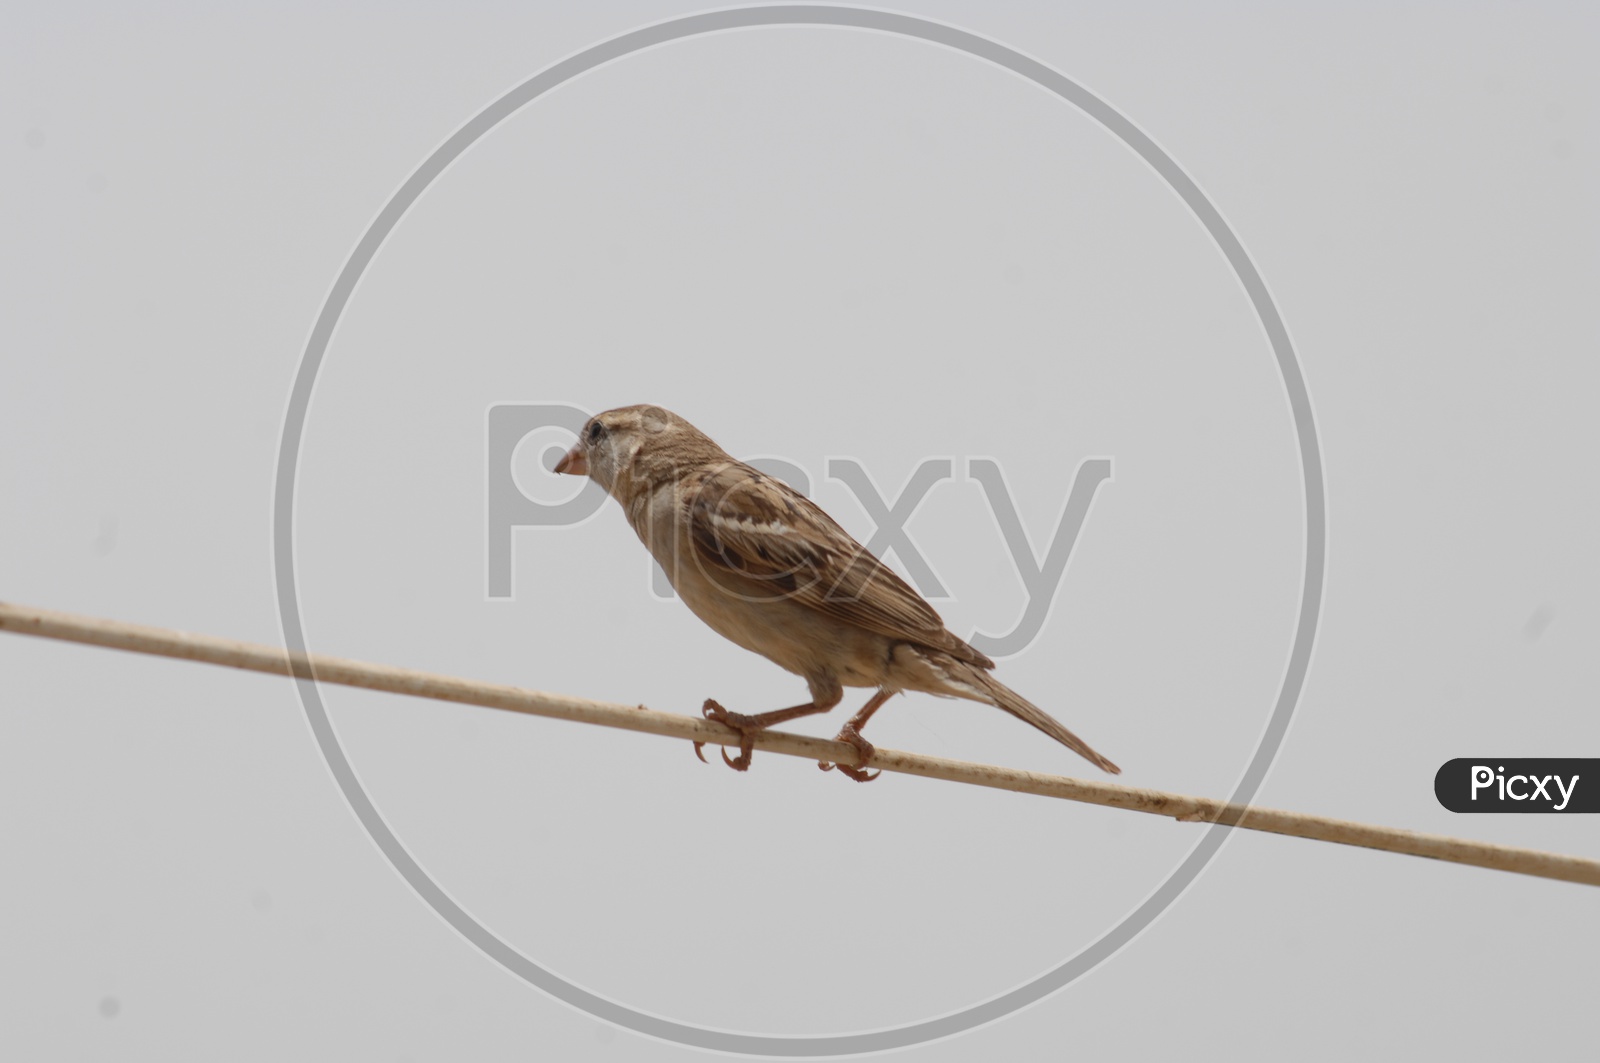 A house sparrow on the stick